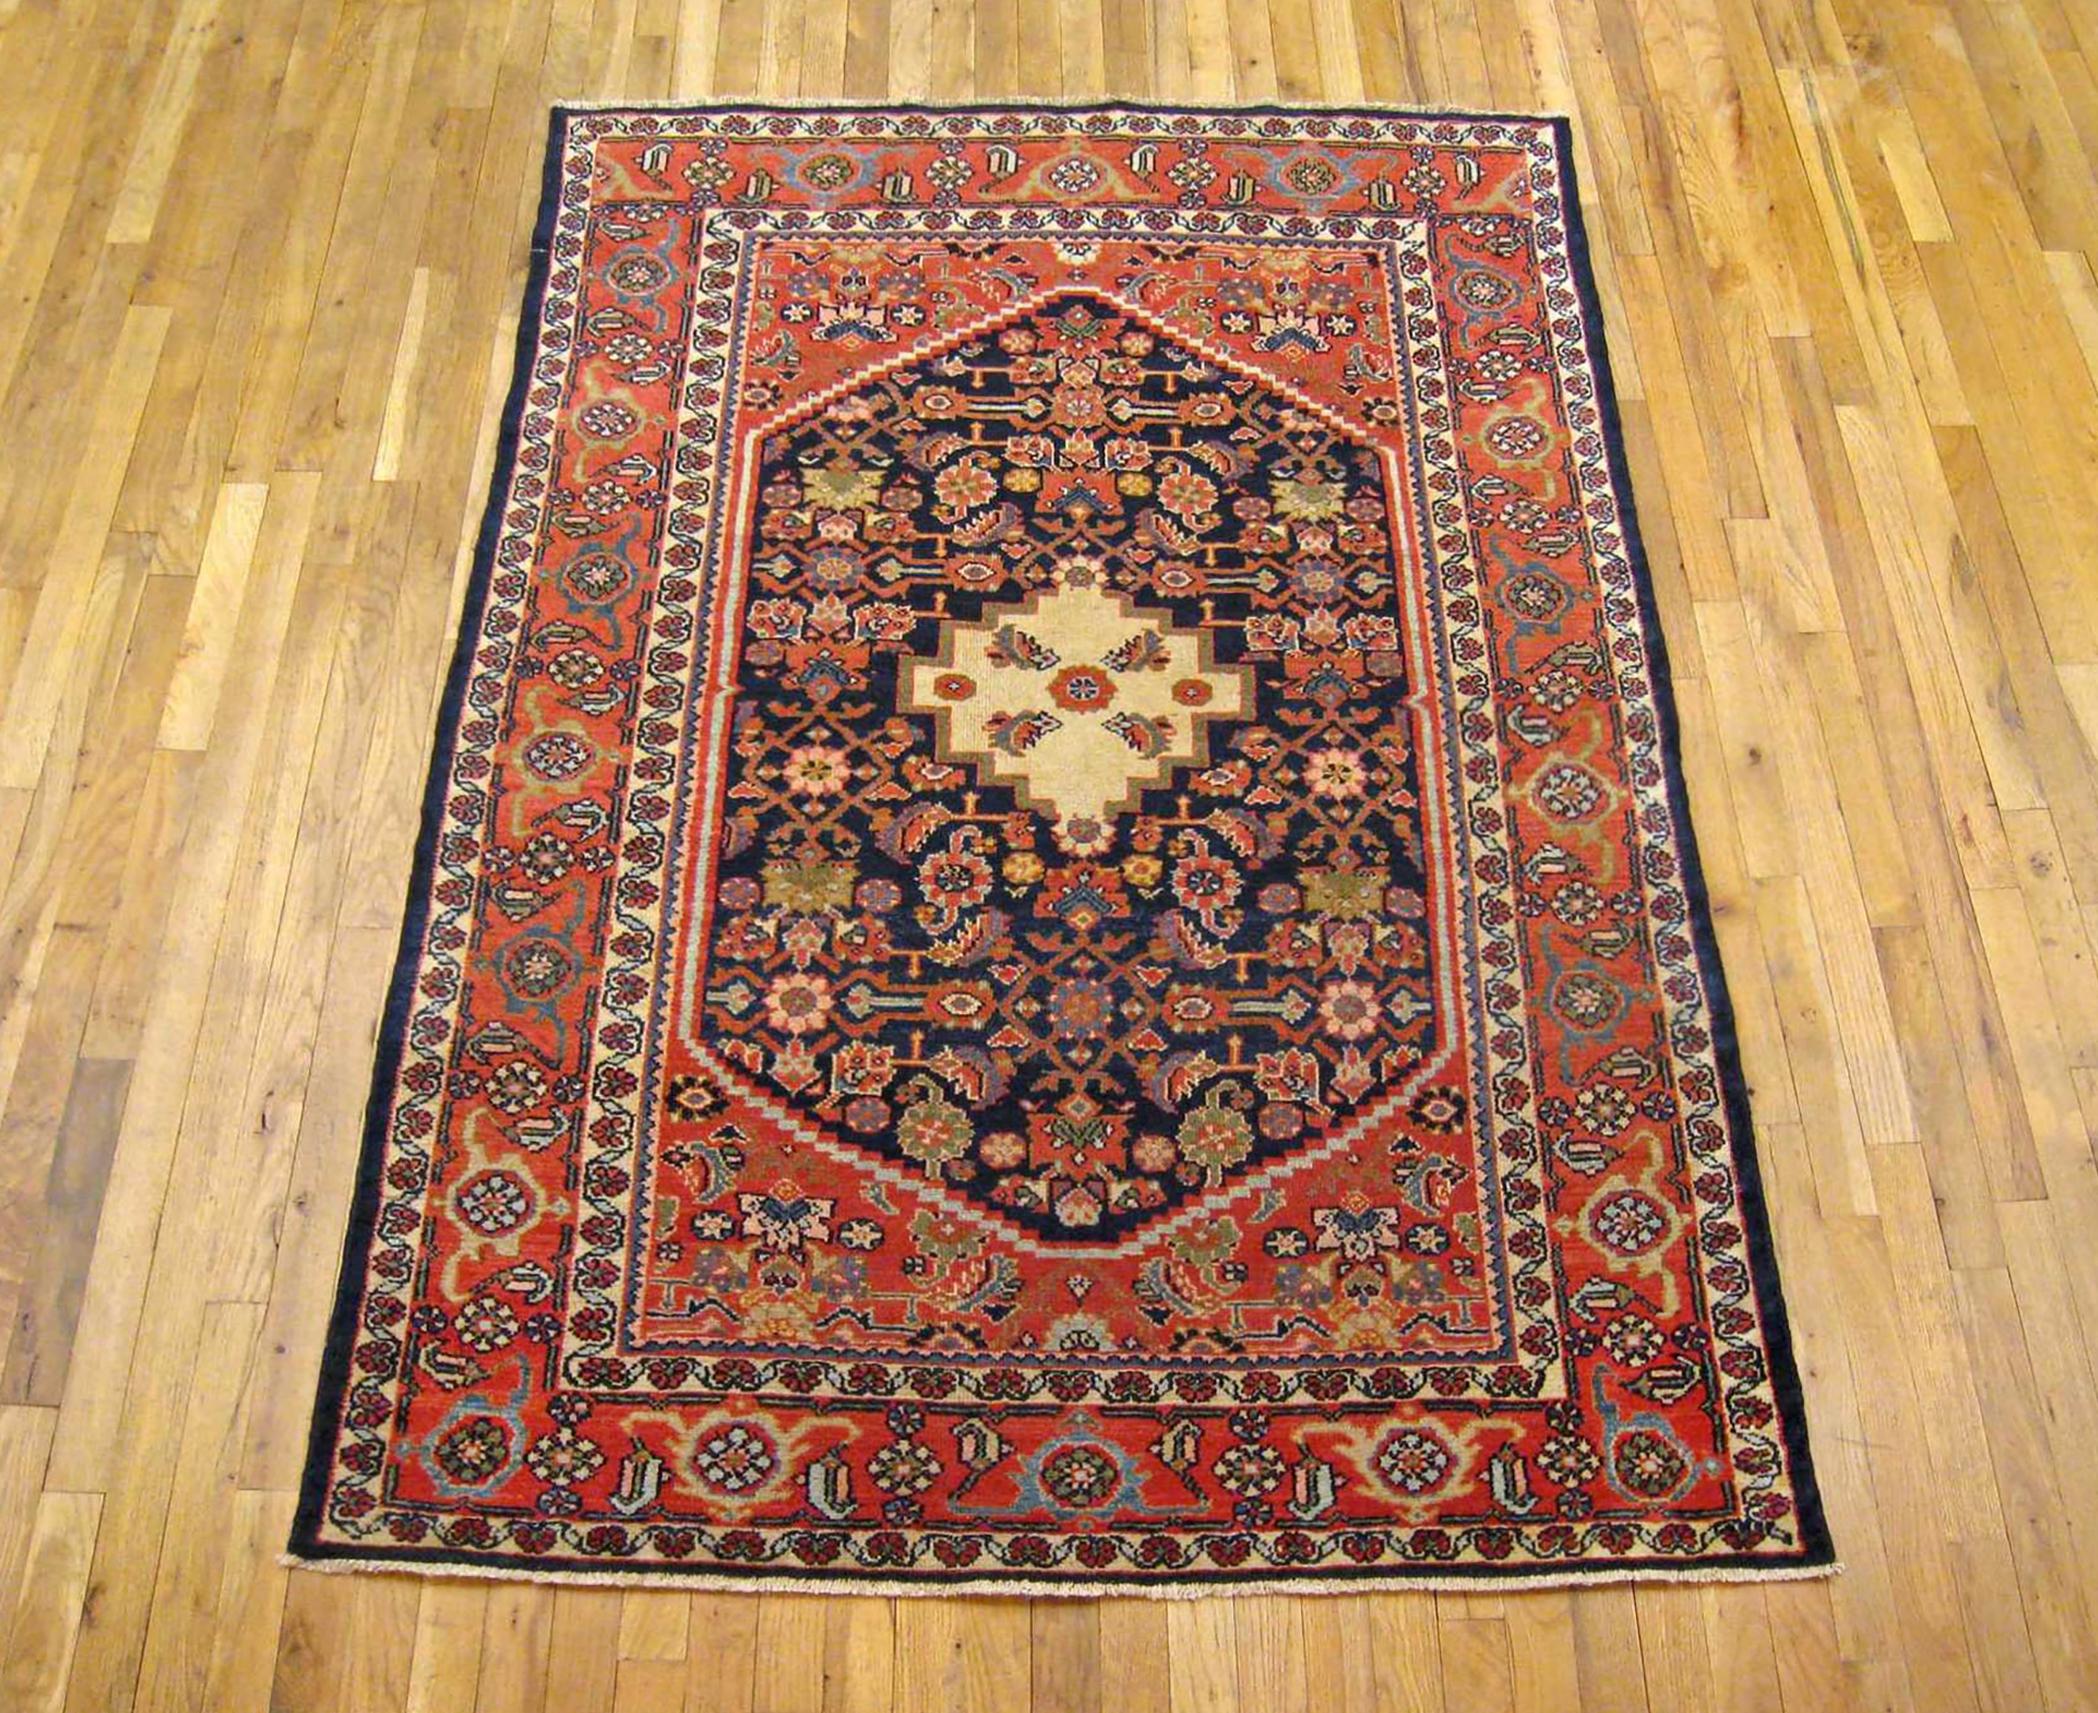 Antique Persian Hamadan Oriental Rug, Small size

An antique Persian Hamadan oriental rug in small size, size 6'7